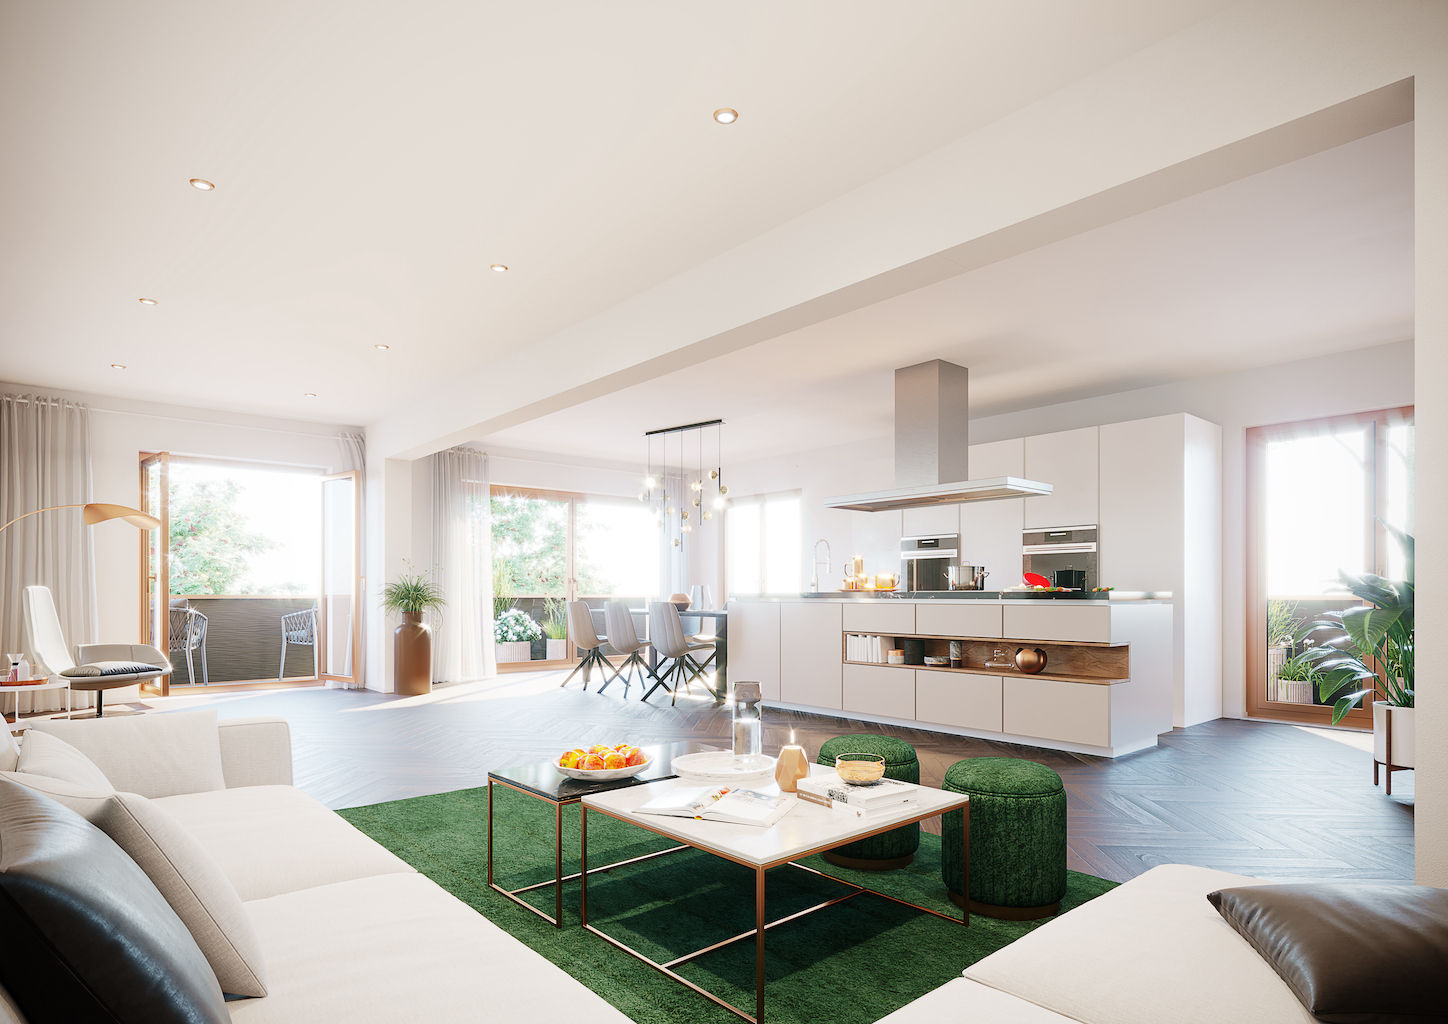 Amselstrasse_Interior_Livingroom